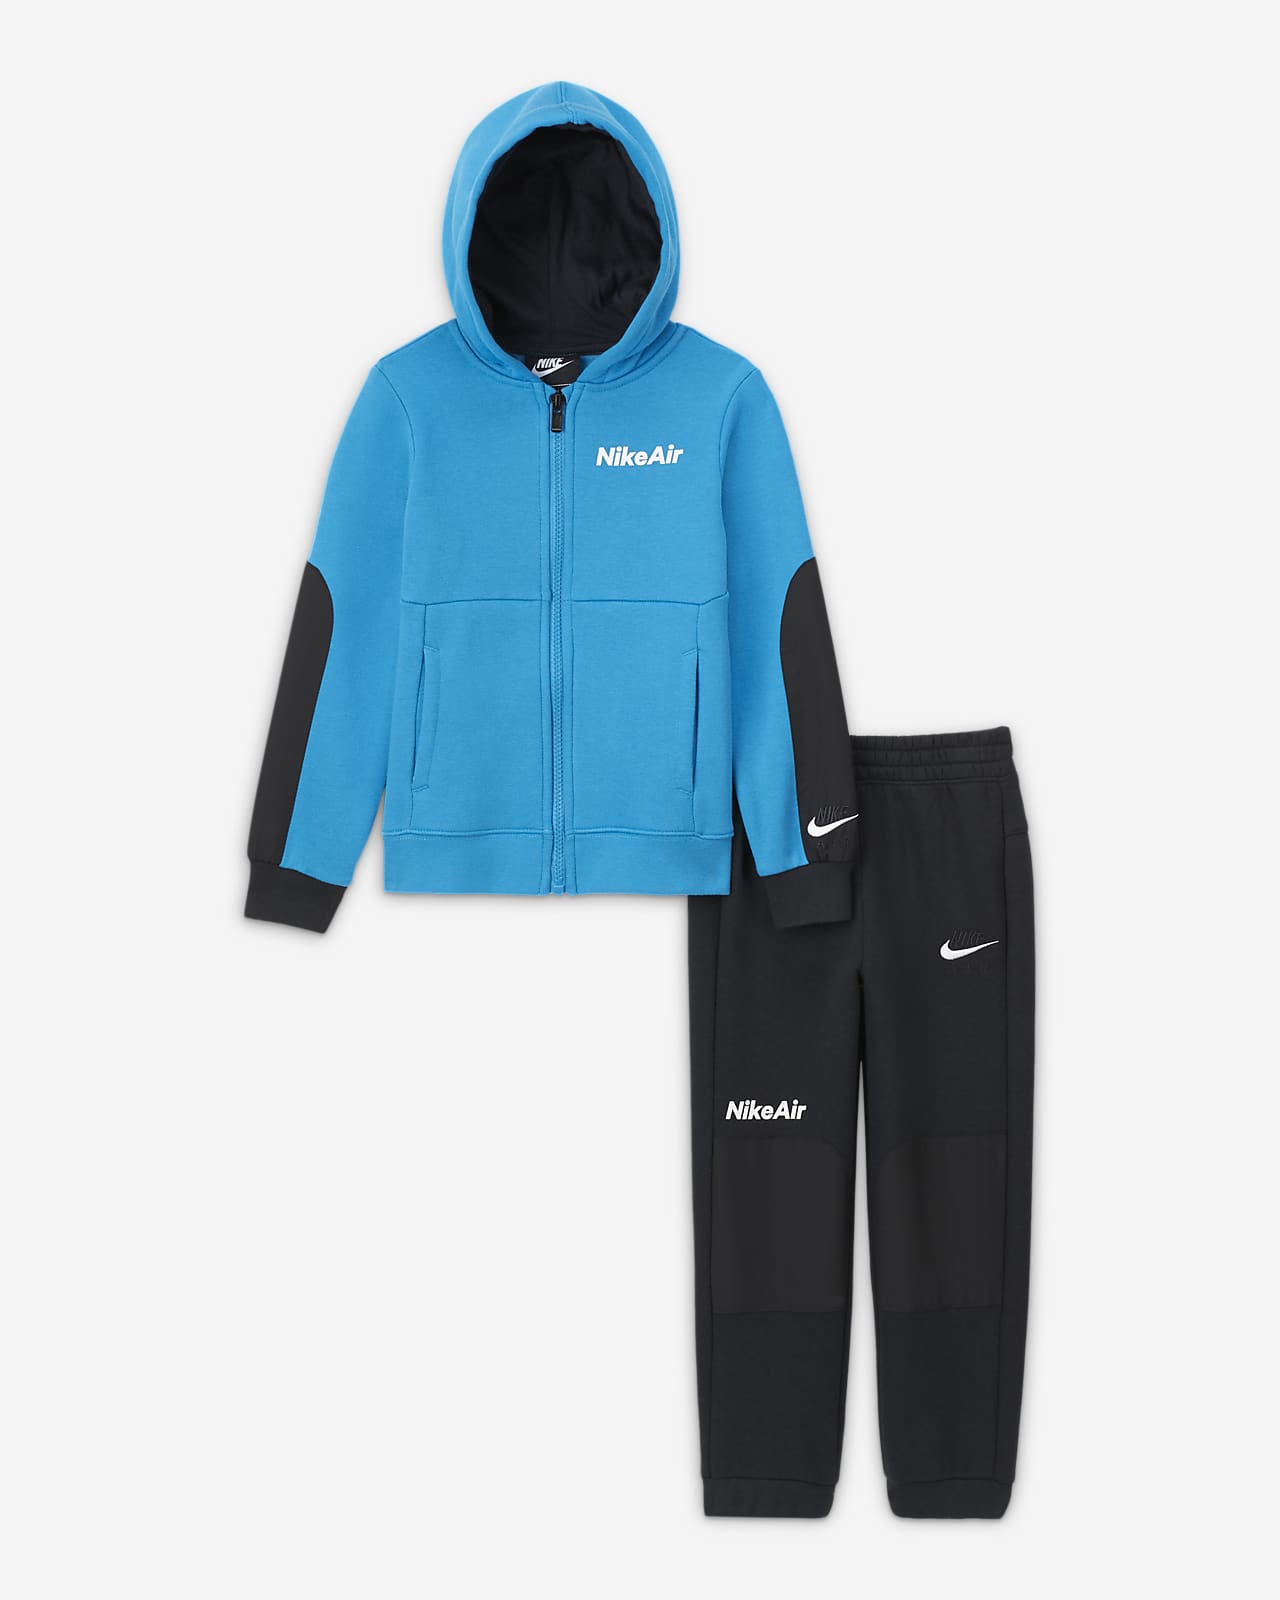 Nike Air Toddler Zip Hoodie and Trousers Set